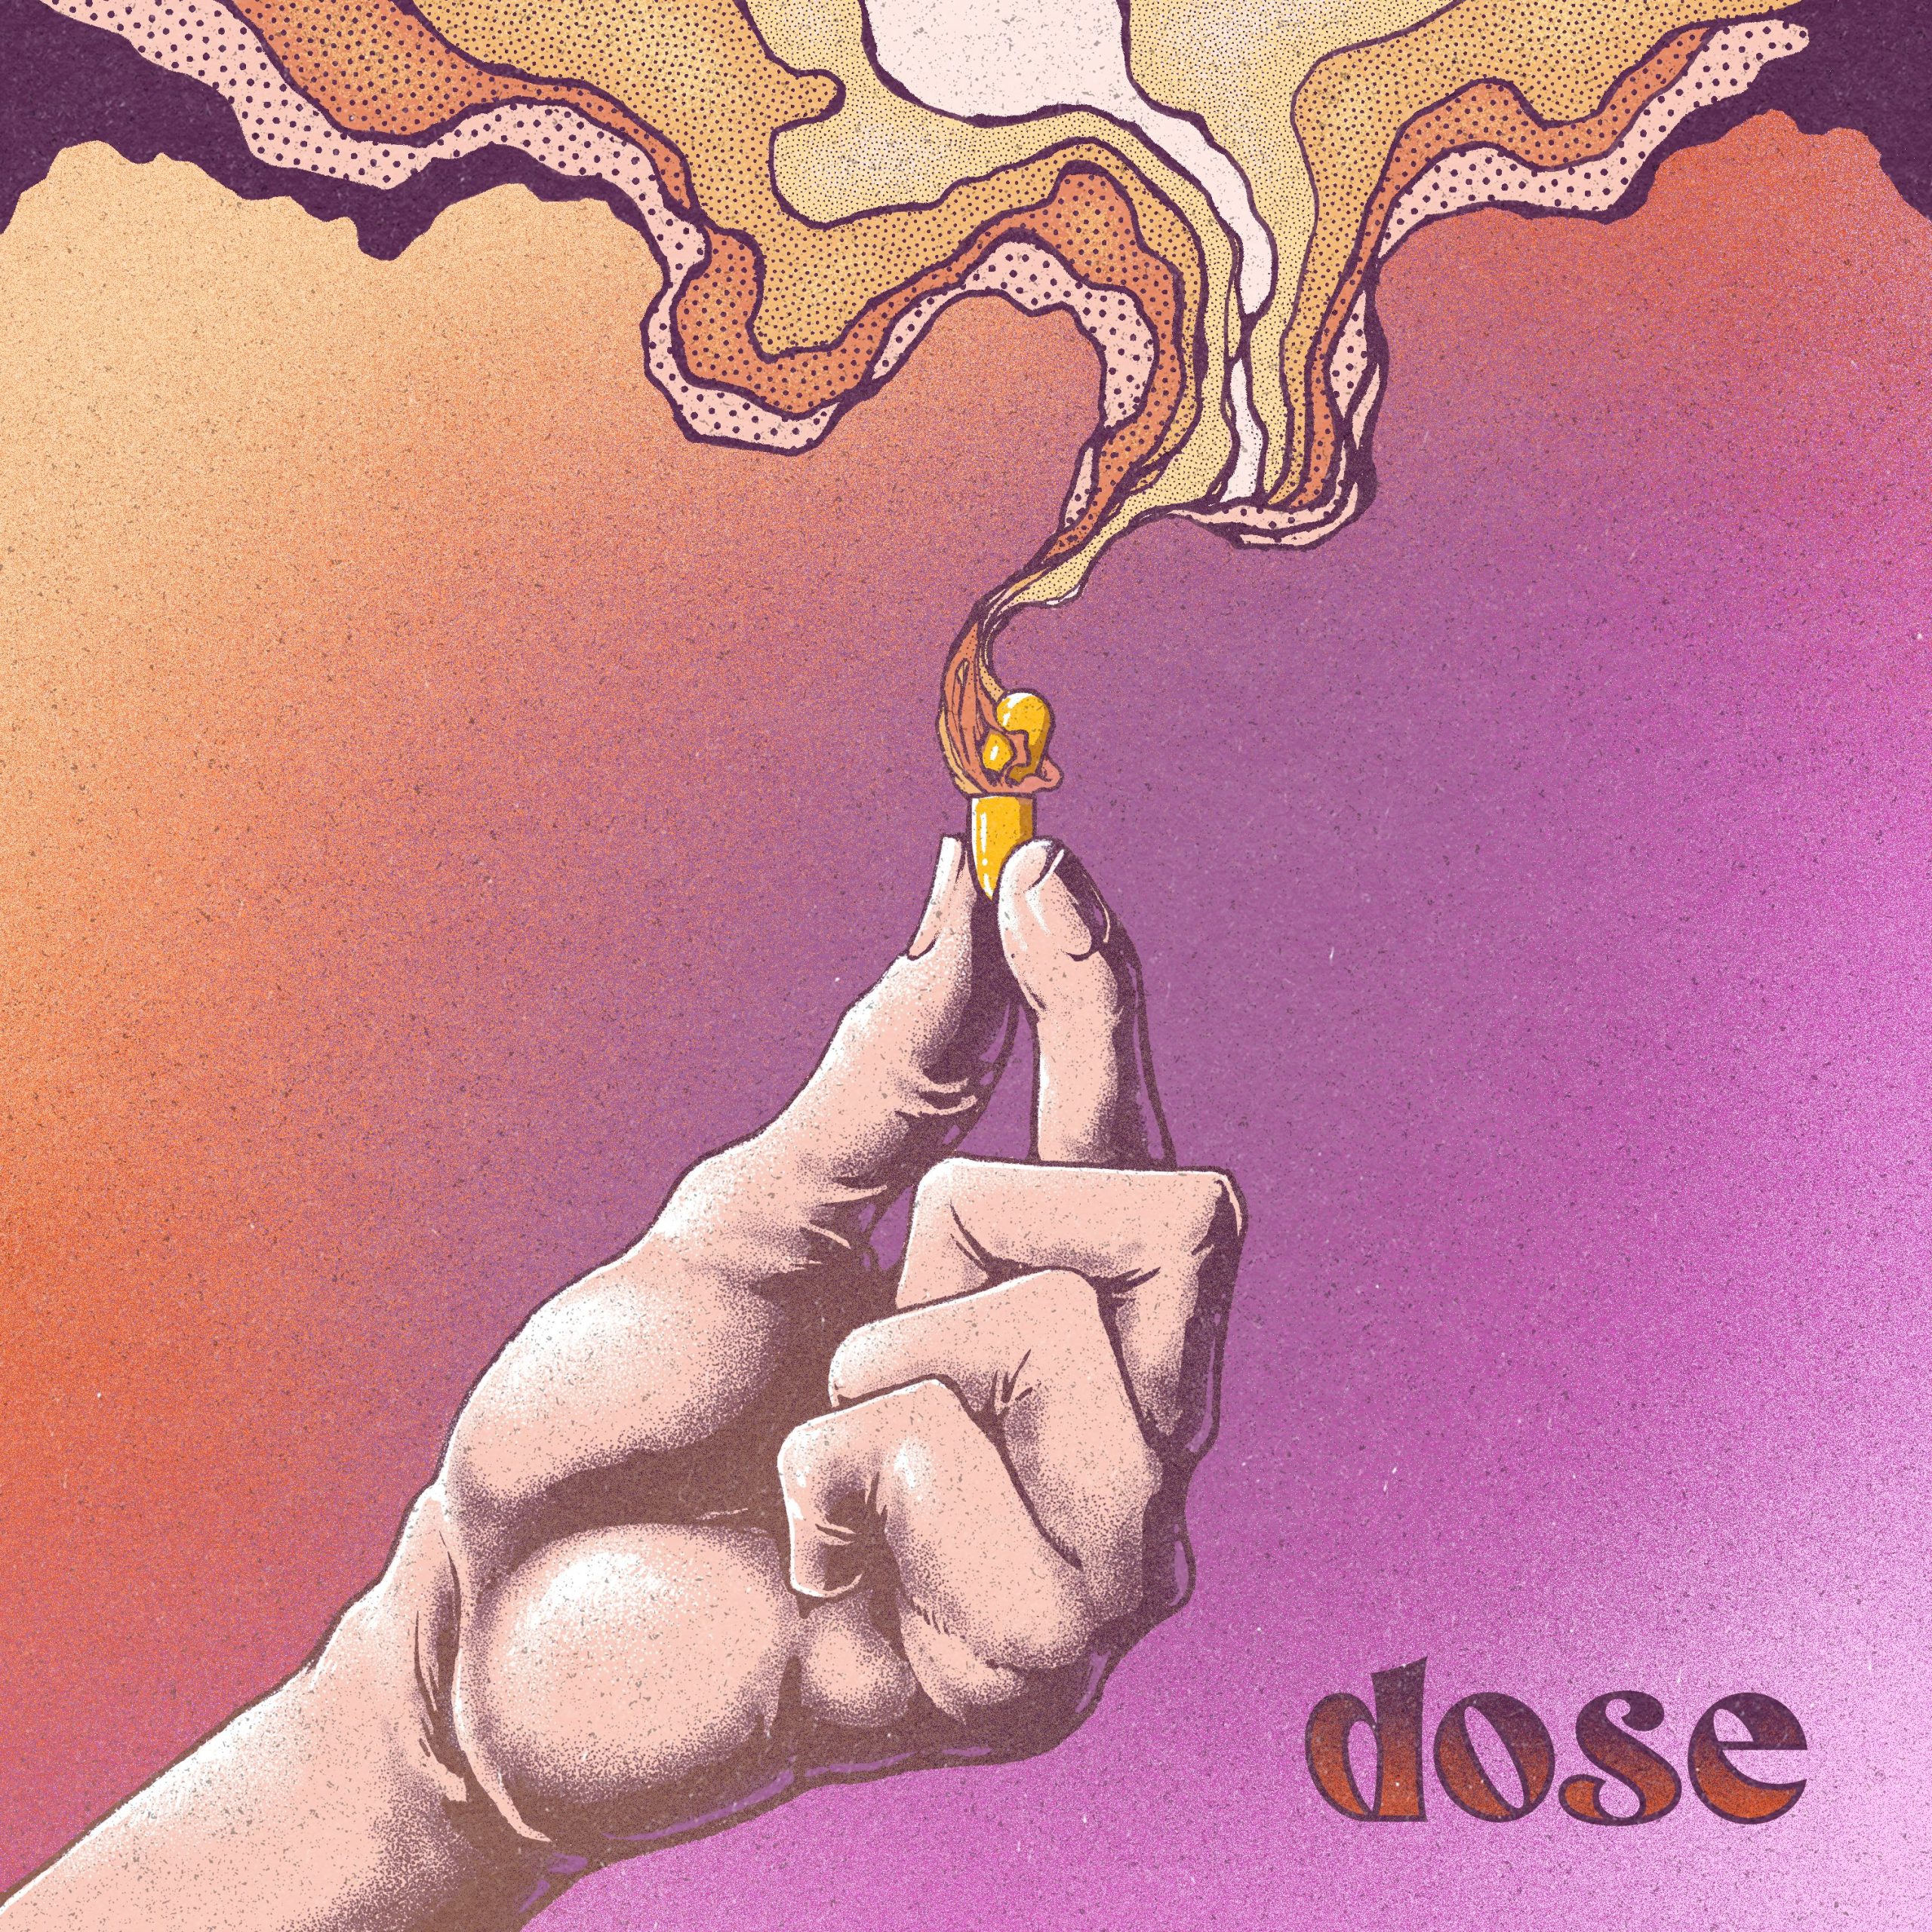 Teddy Swims dose cover artwork